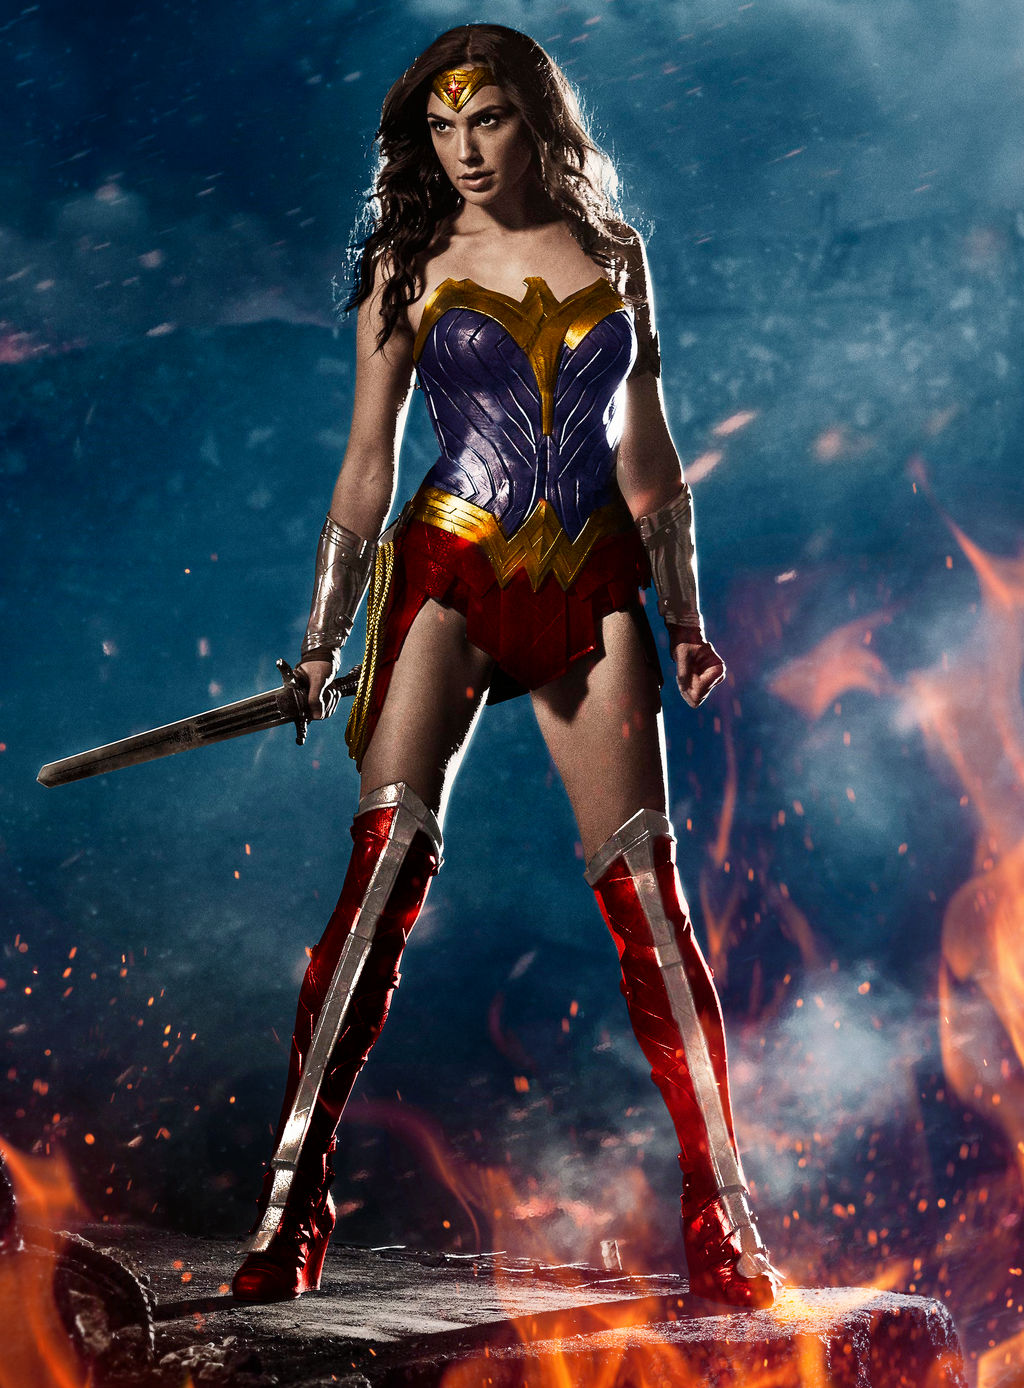 Wonder Woman's Costume | Gal Gadot | Changed by Alex-Golden on DeviantArt